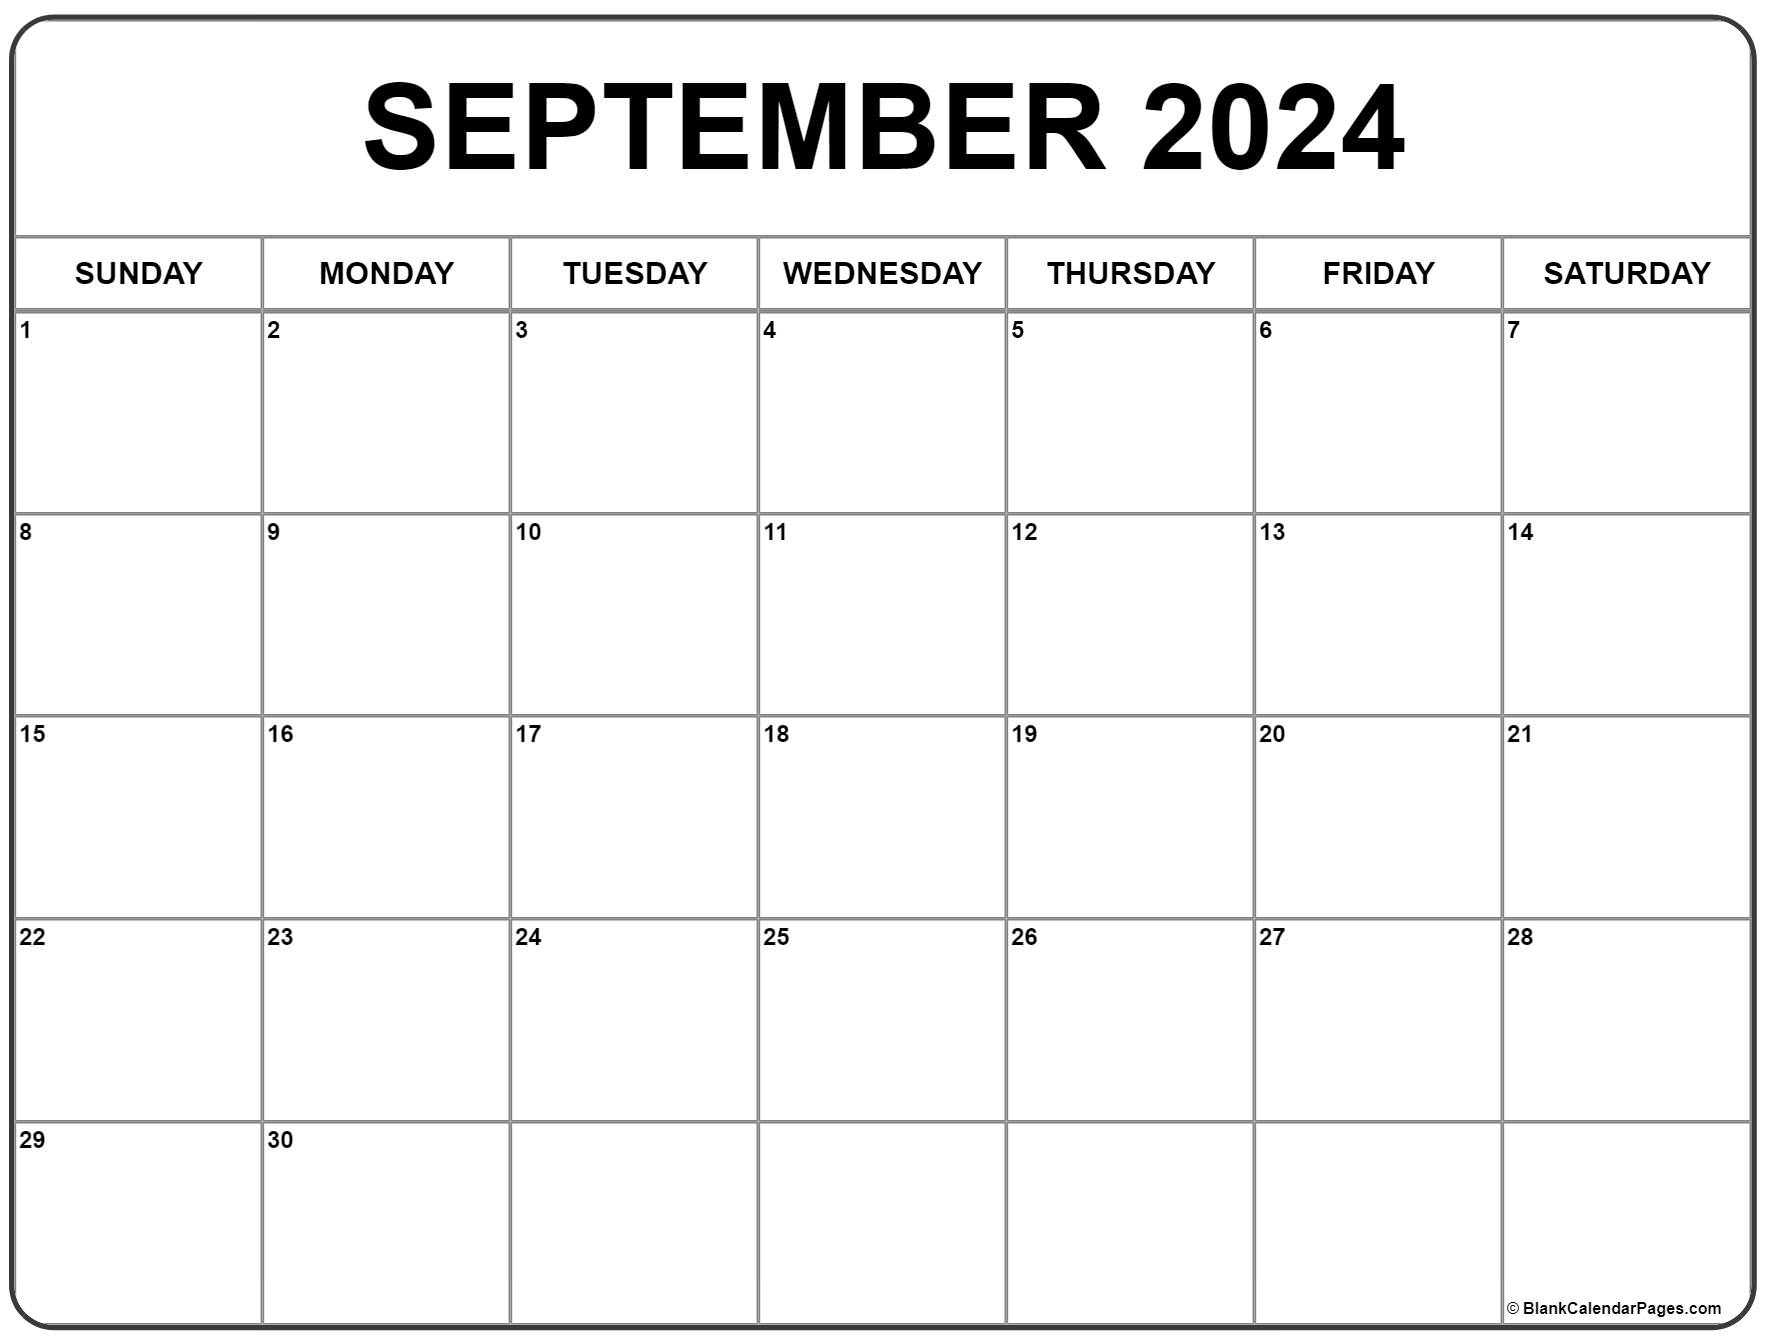 September 2024 Calendar | Free Printable Calendar for September 2024 Calendar Free Printable